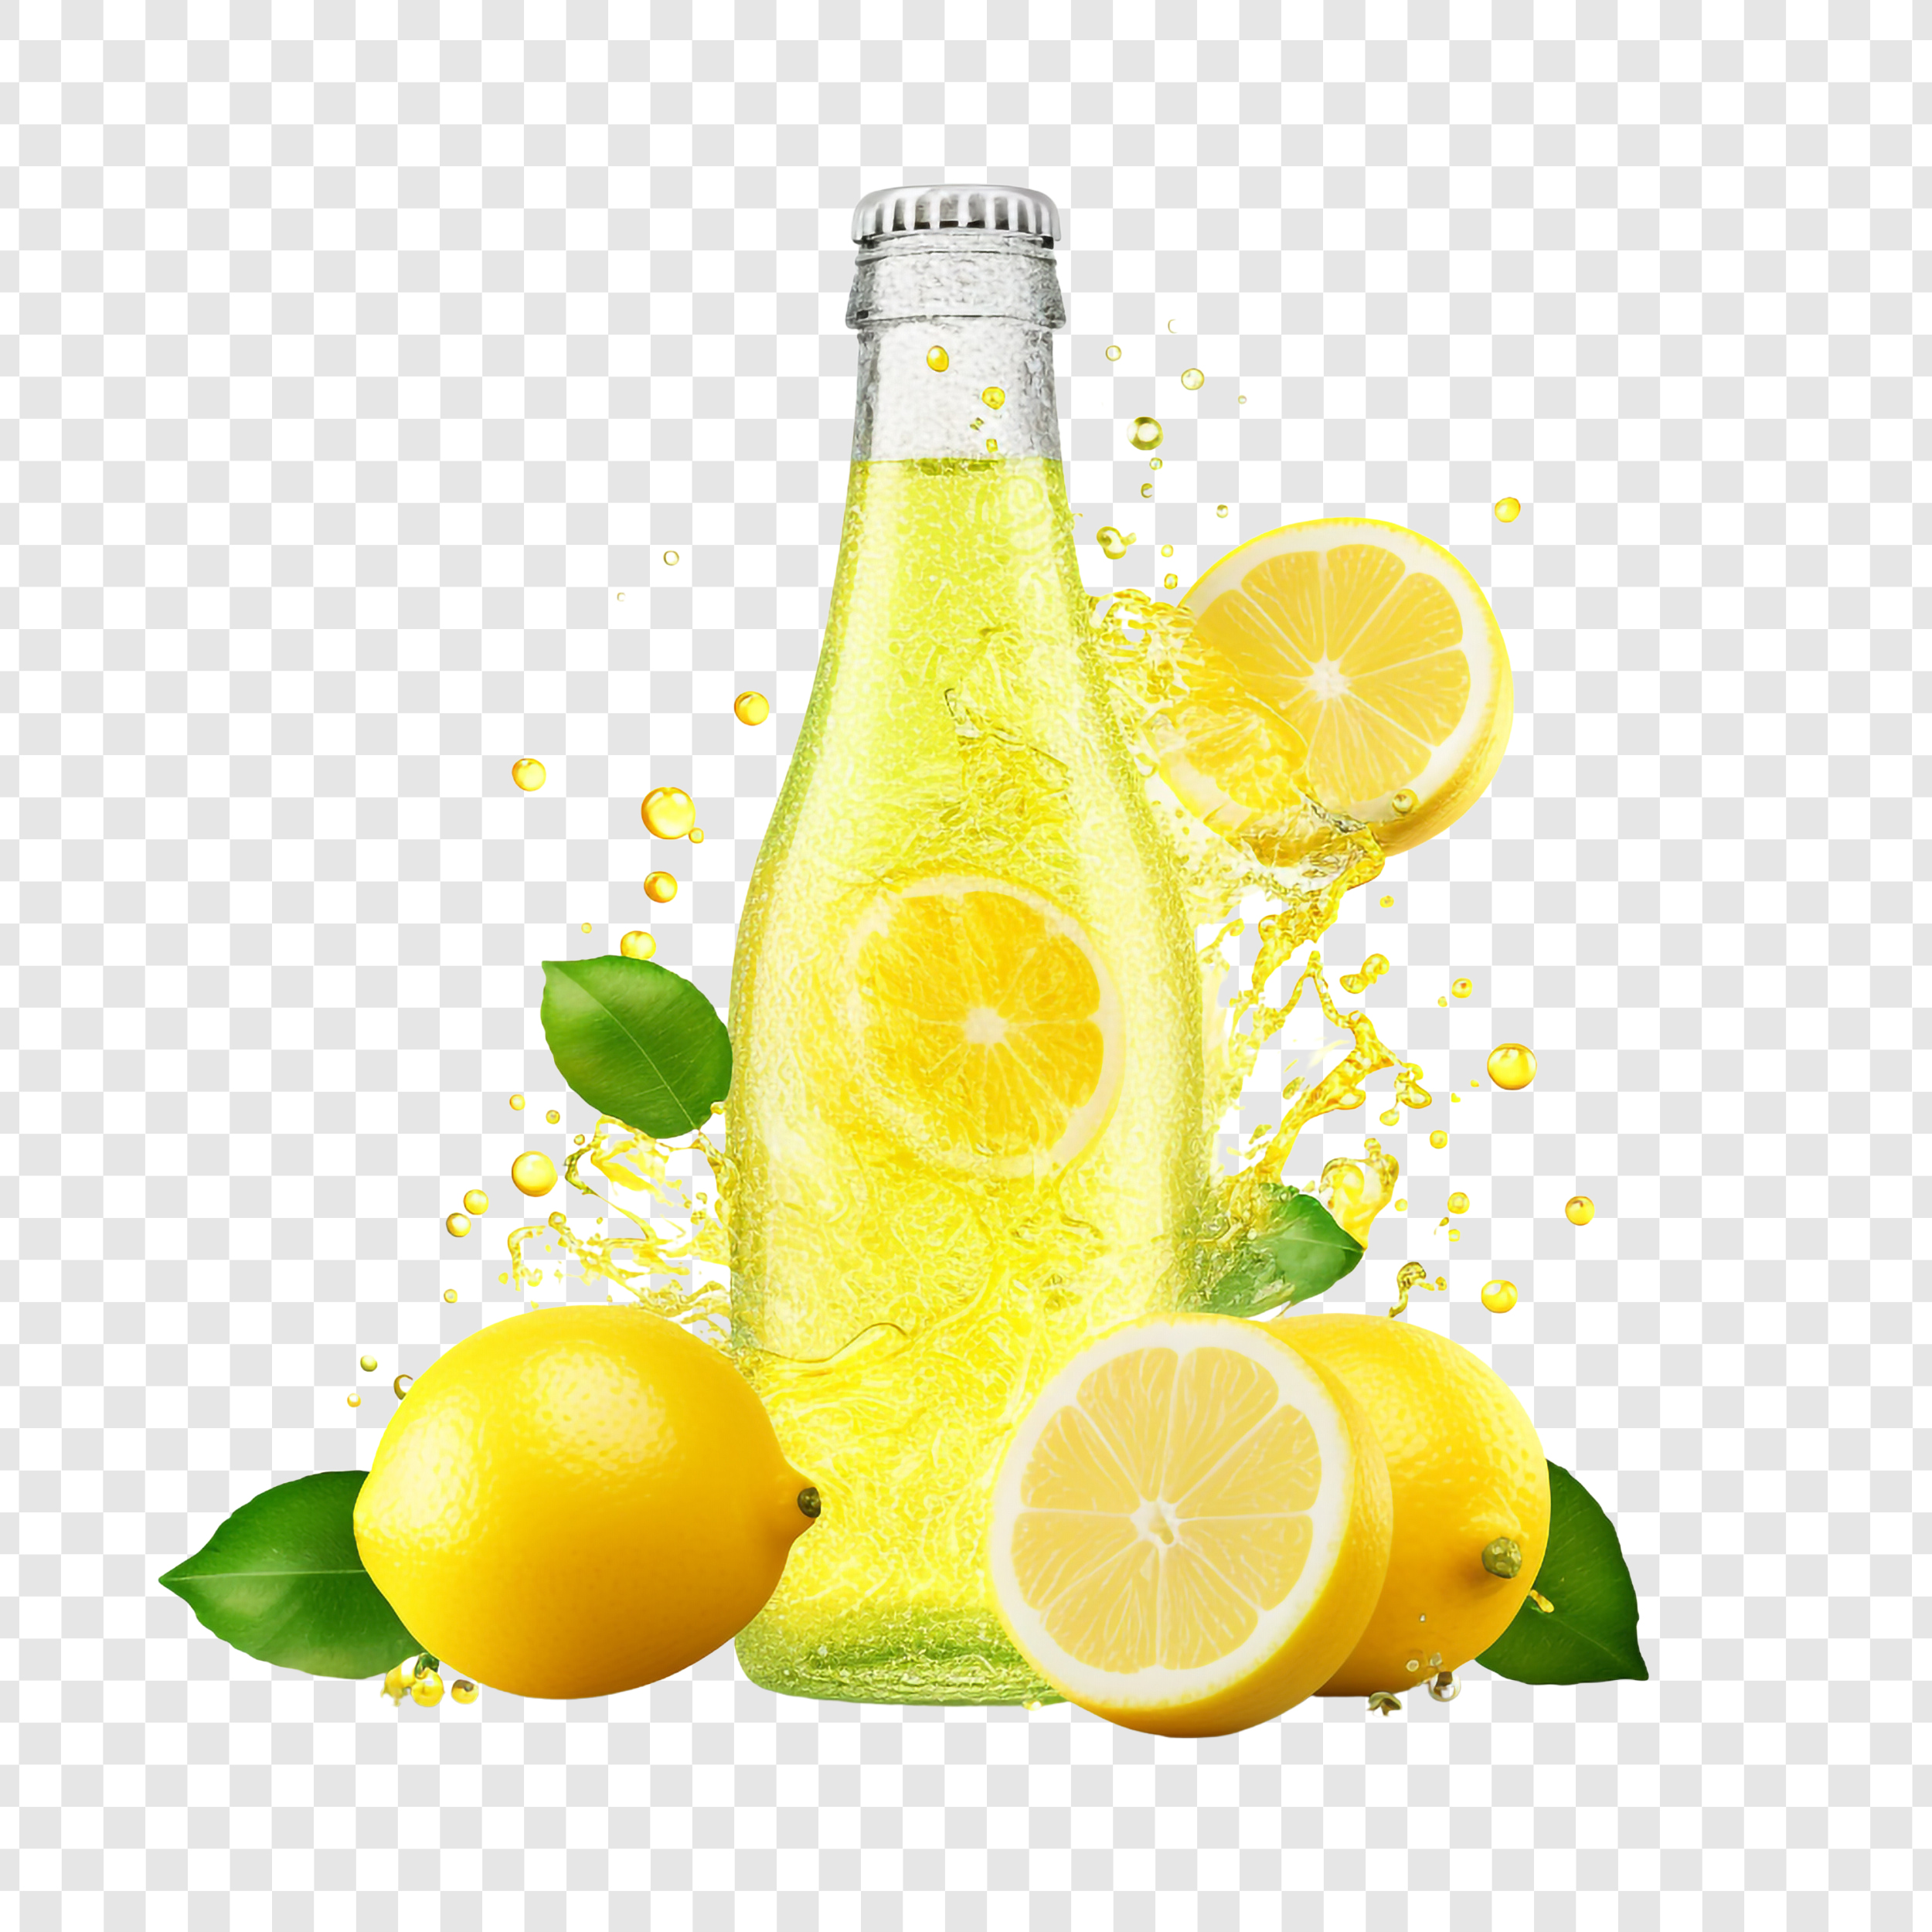 Lemon for juice